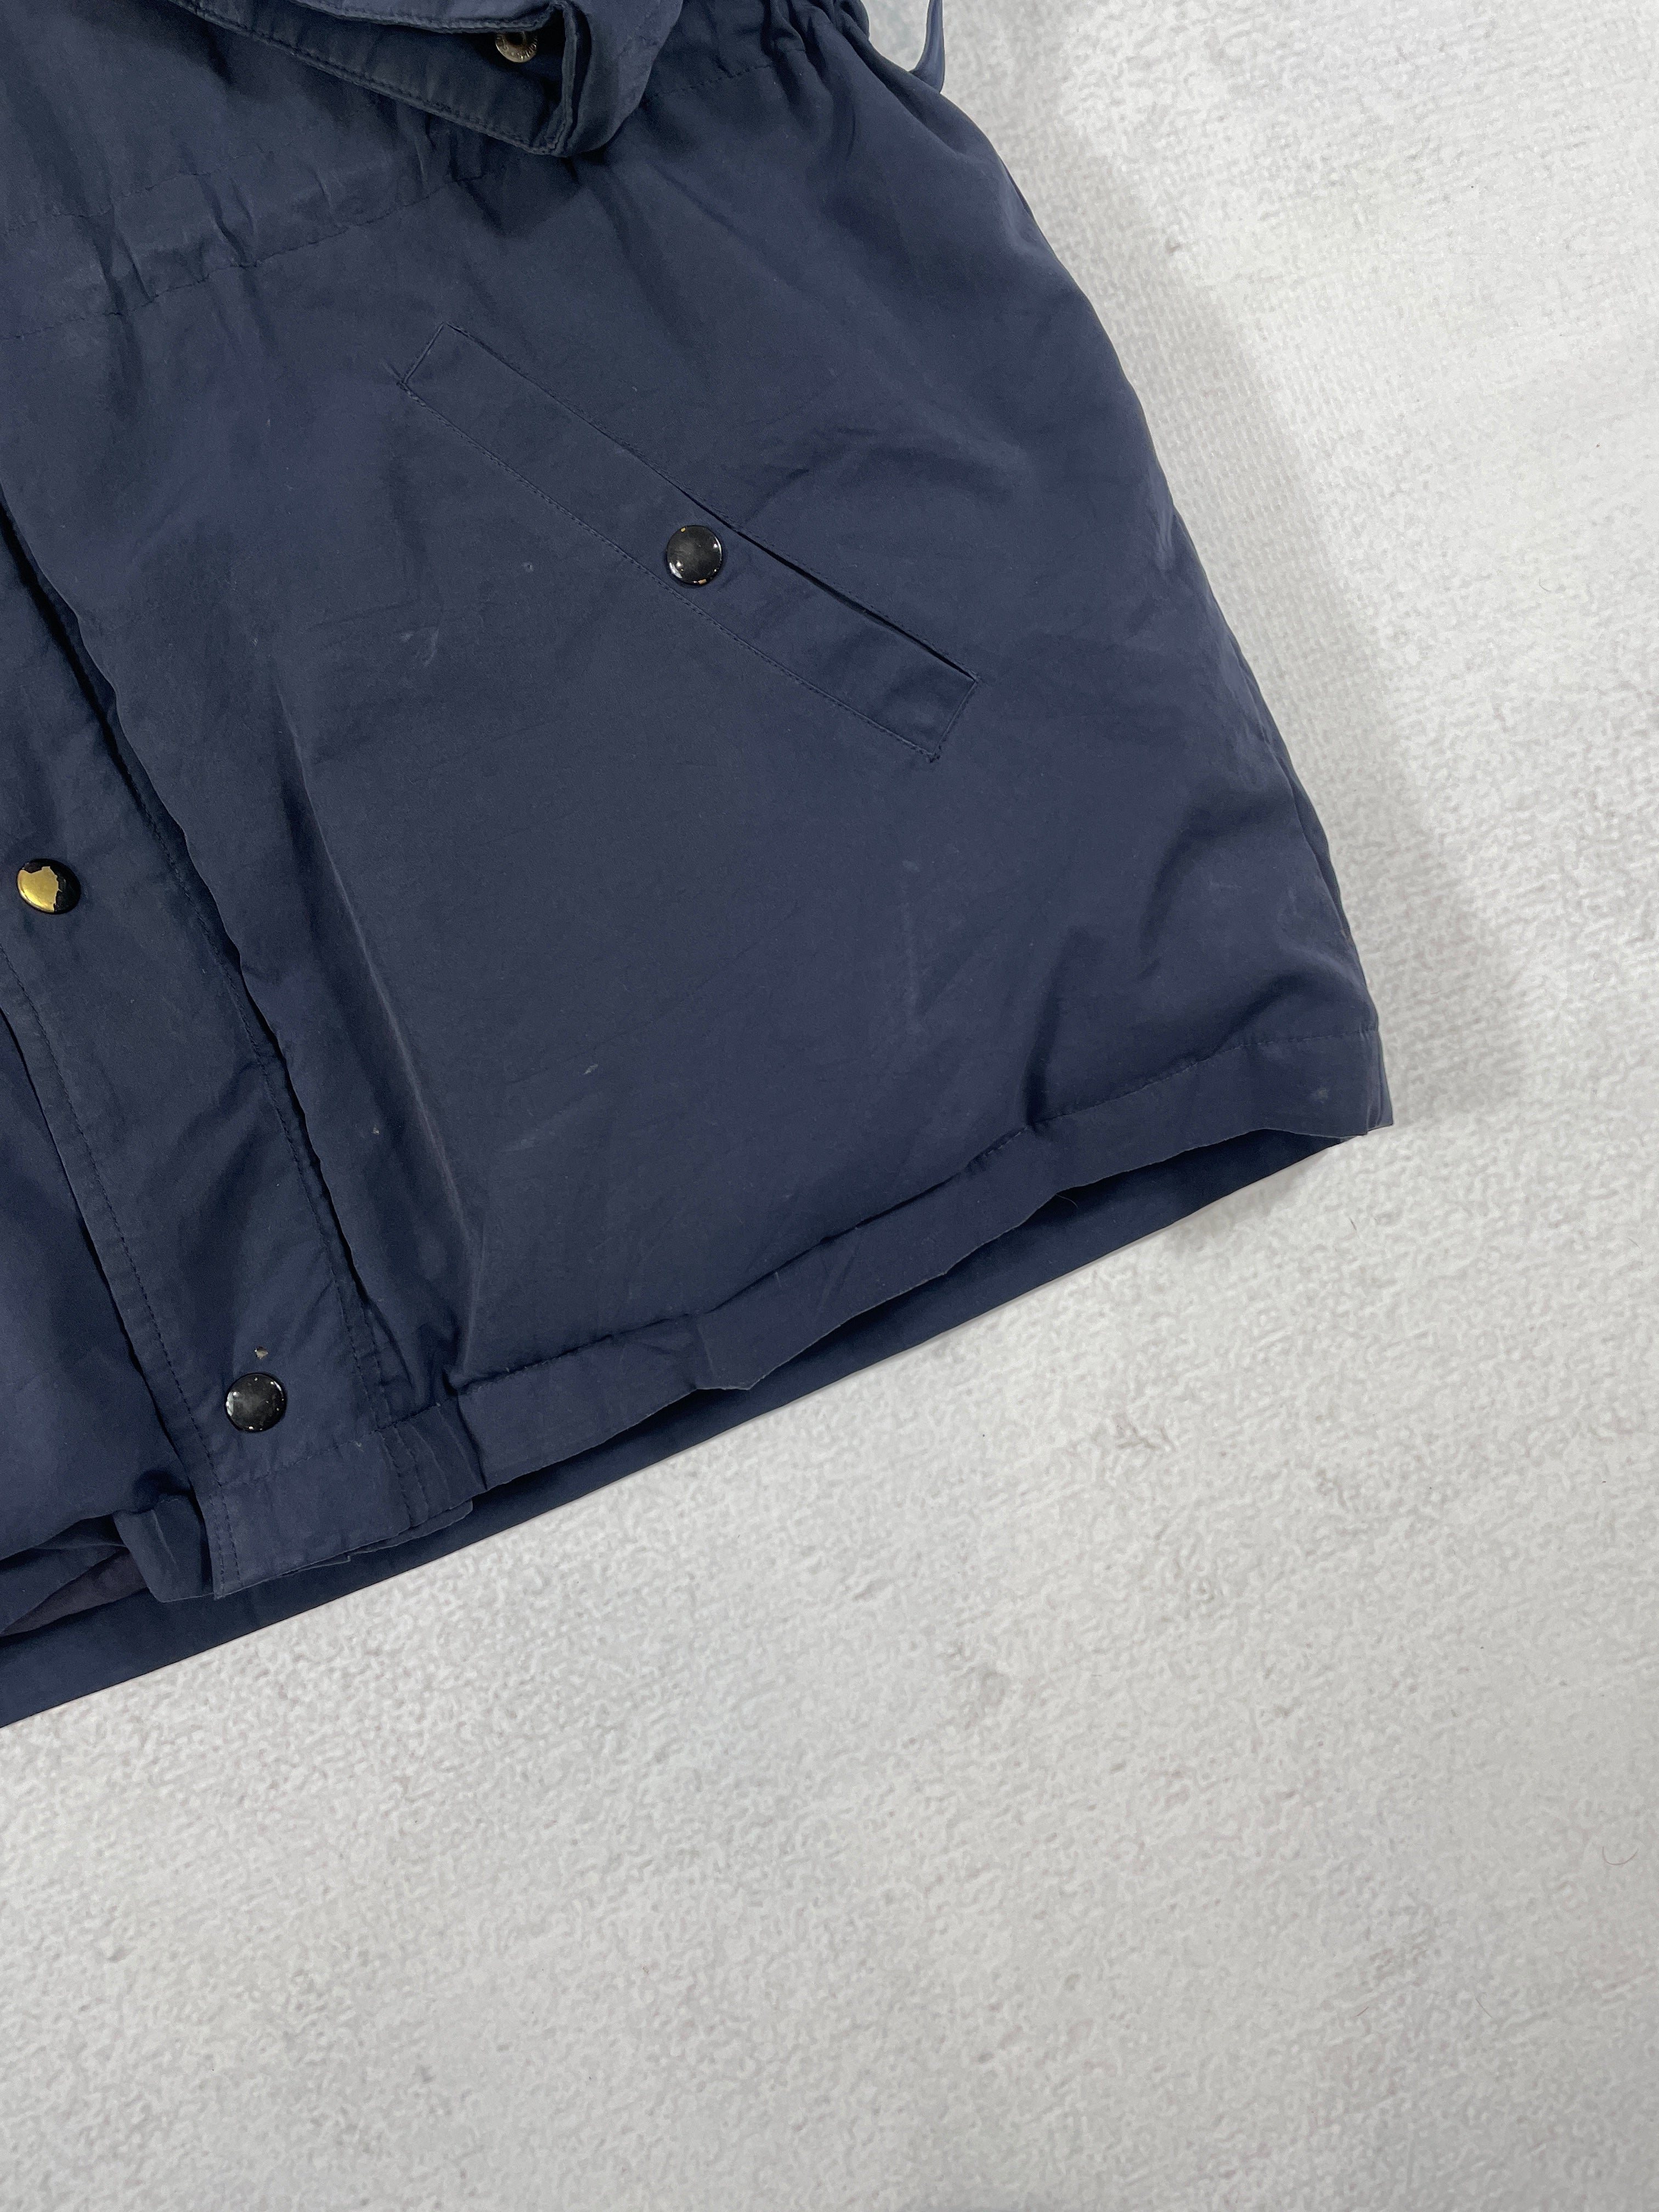 Vintage Polo Ralph Lauren Insulated Jacket - Men's Medium